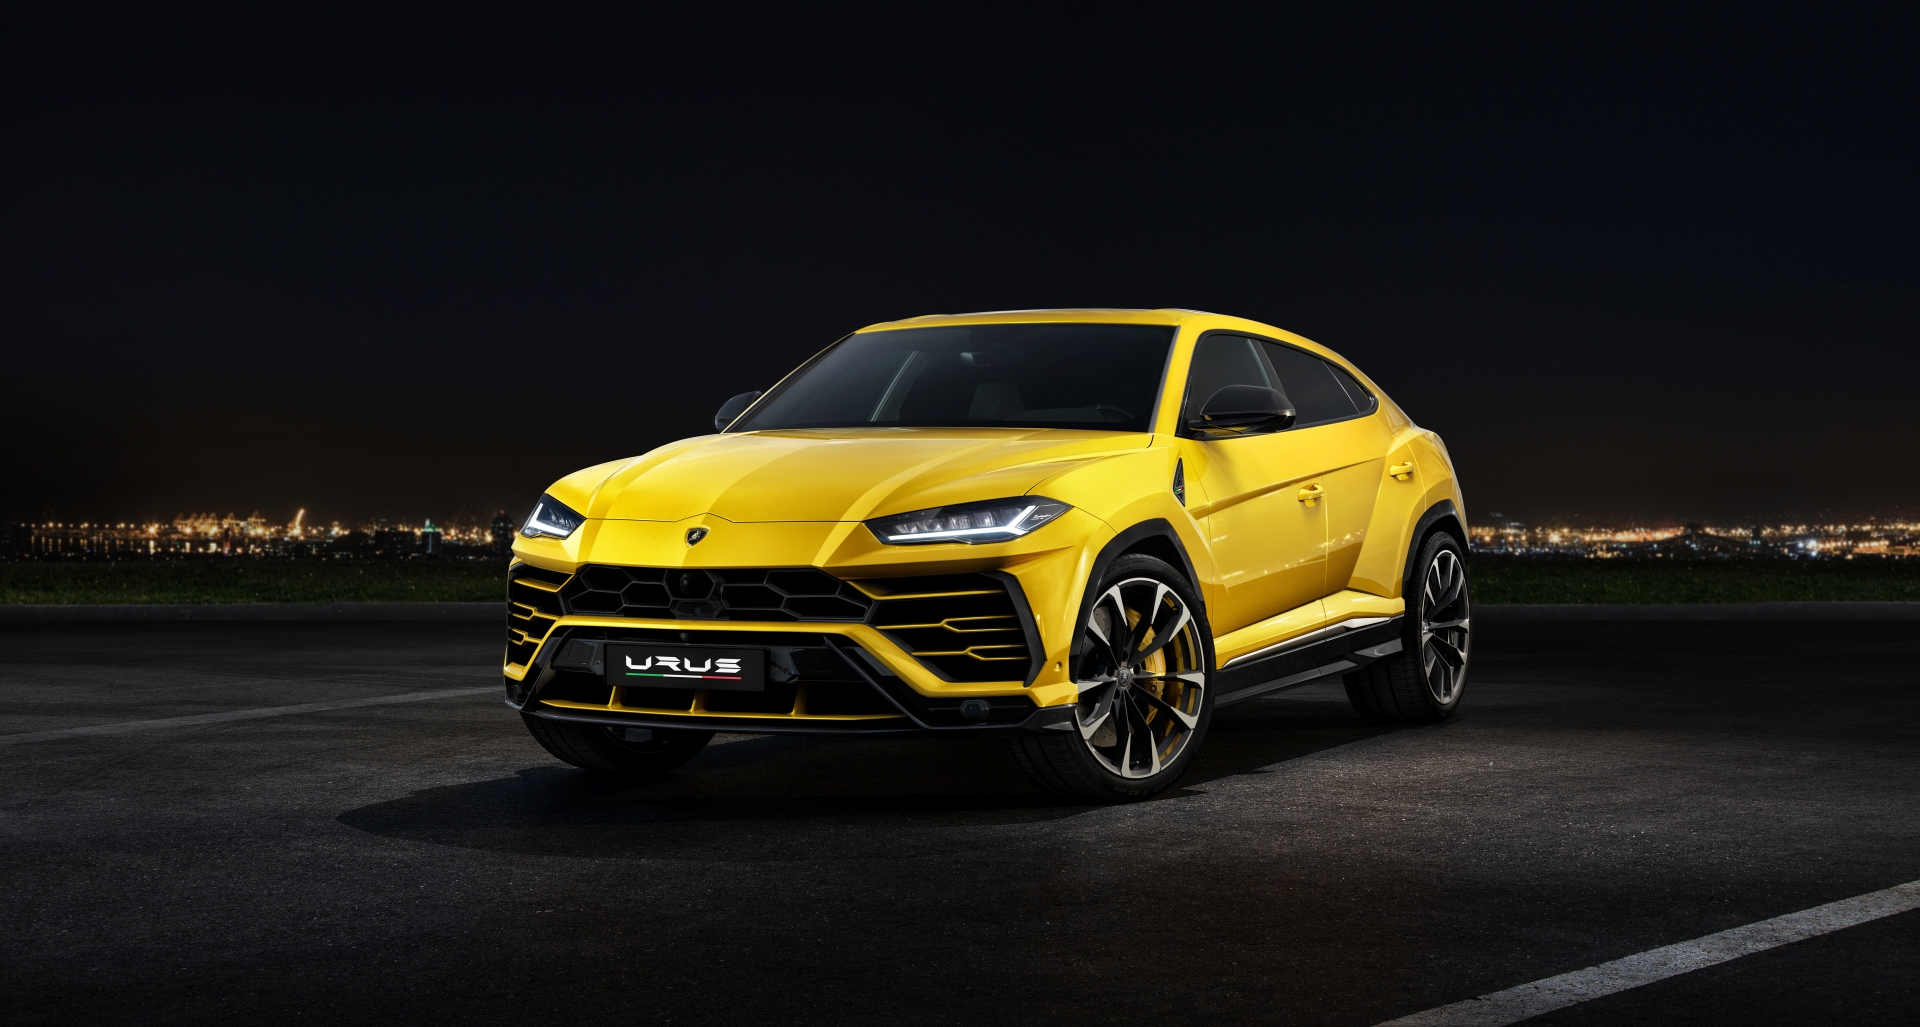 2018 Lamborghini Urus SUV - Yellow Exterior - Front Side View - Black Background